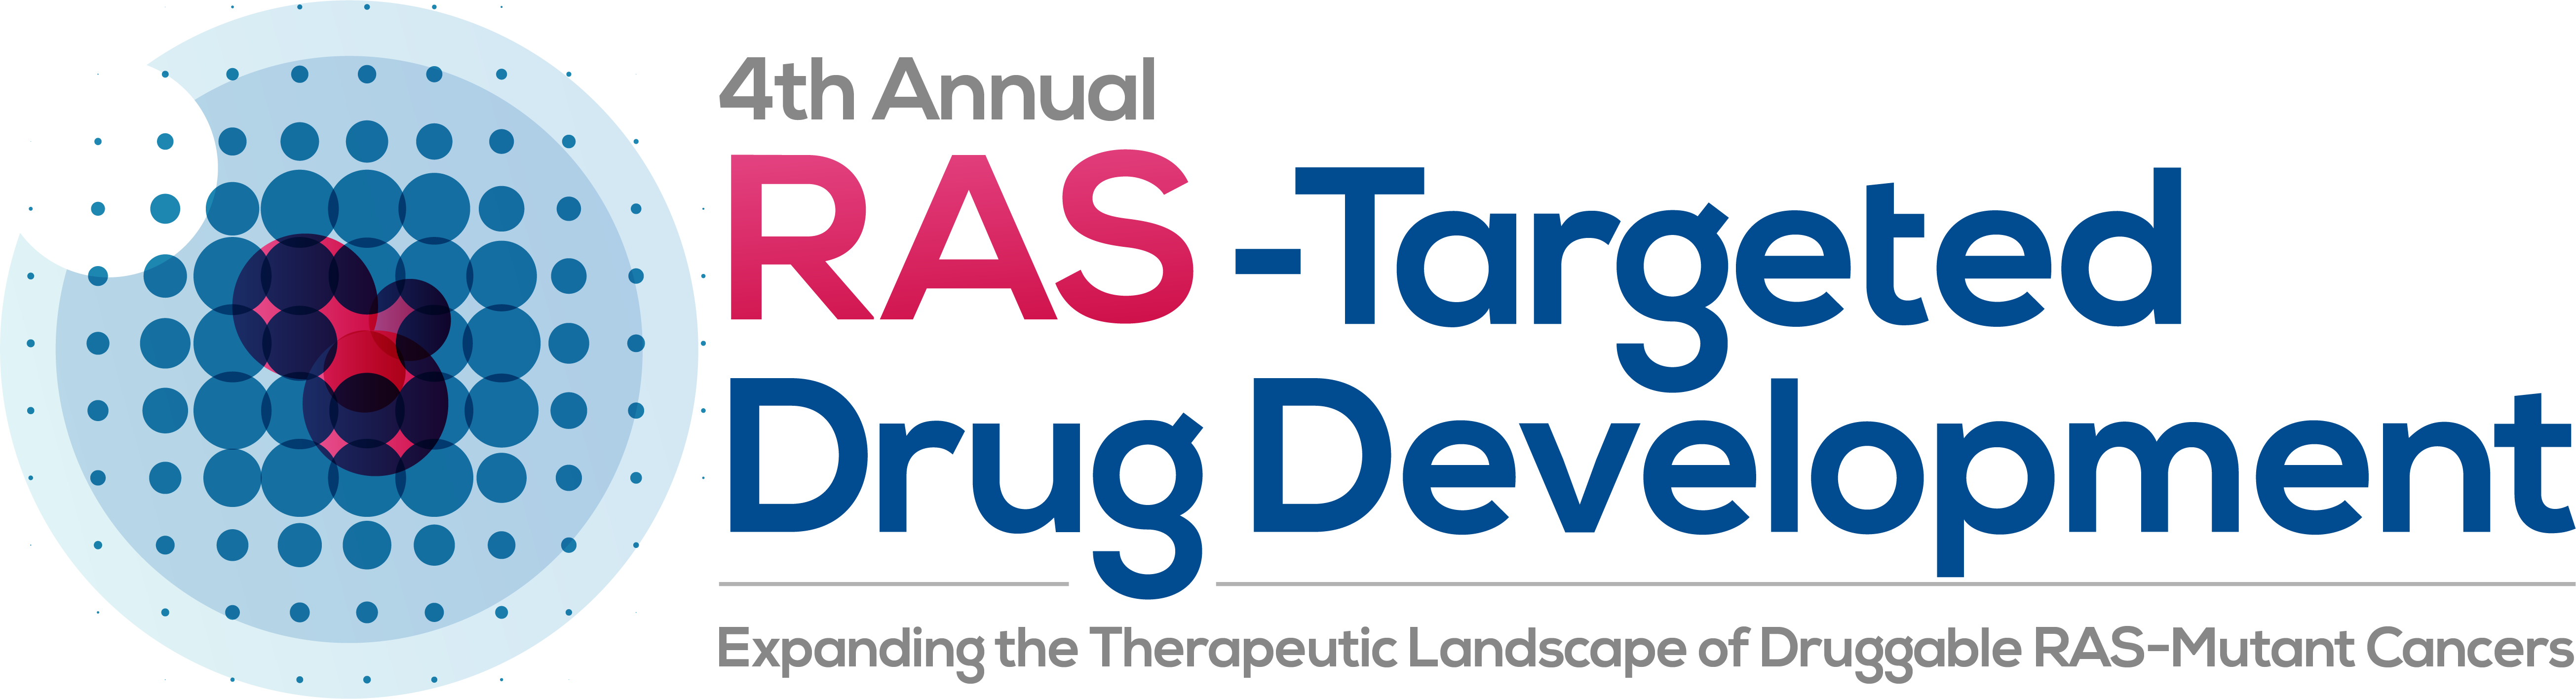 HW220424 25670- 4th RAS - Targeted Drug Development Summit logo FINAL